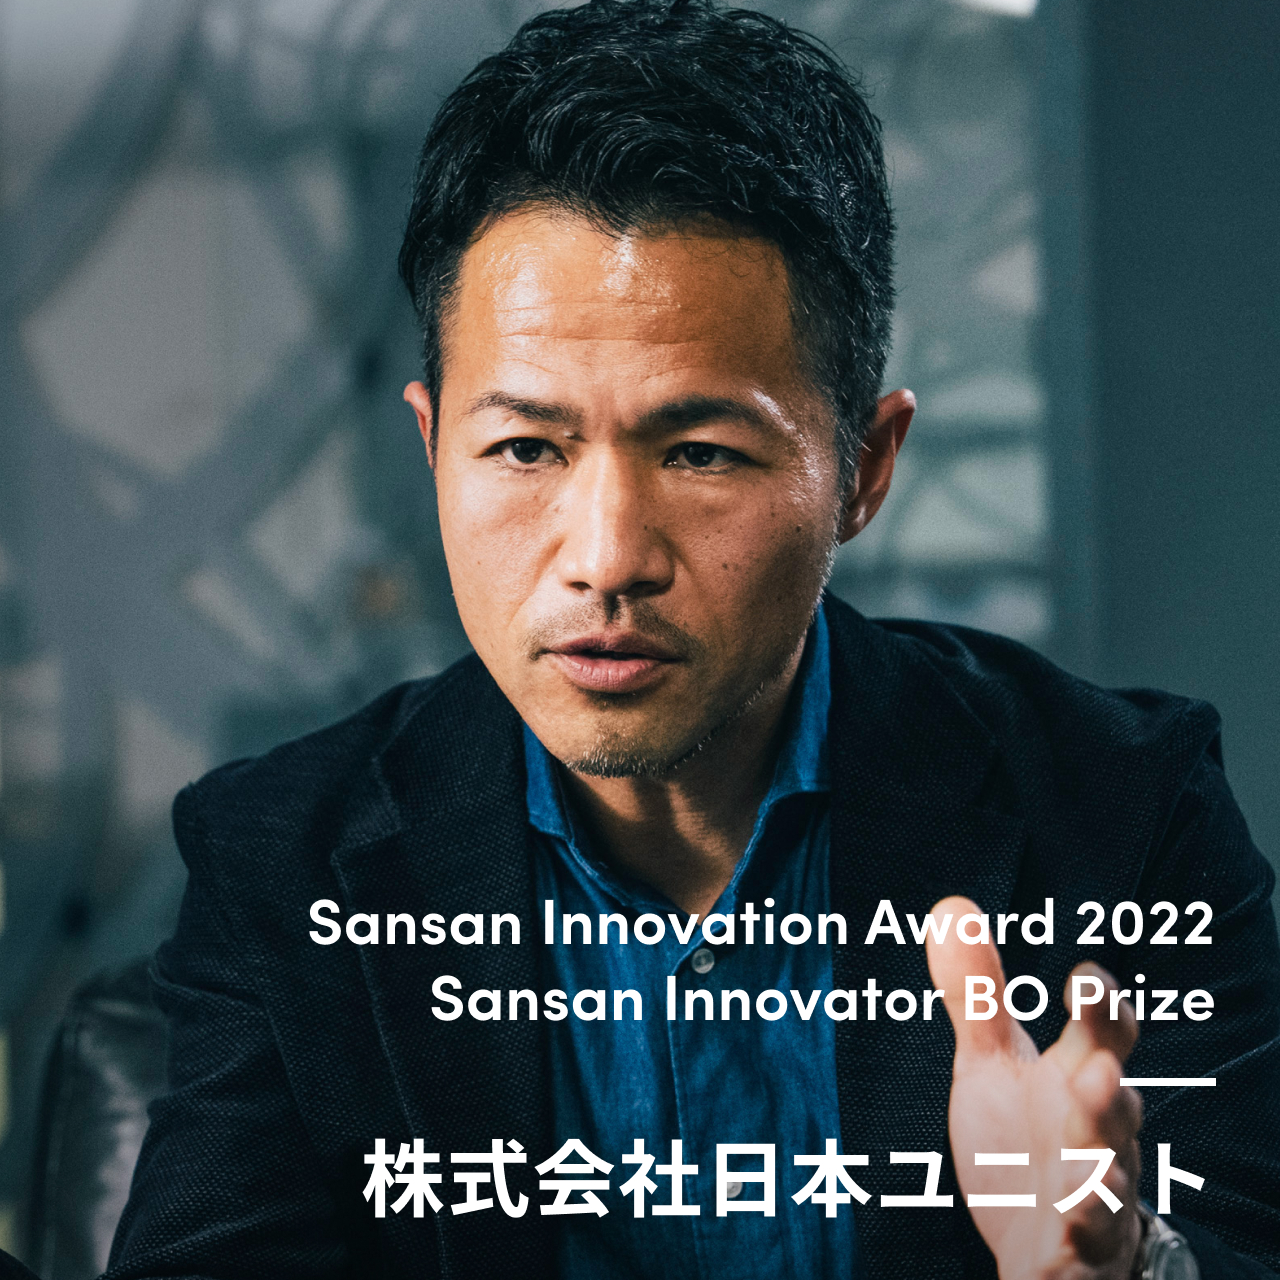 Sansan Innovator BO Prize 株式会社日本ユニスト